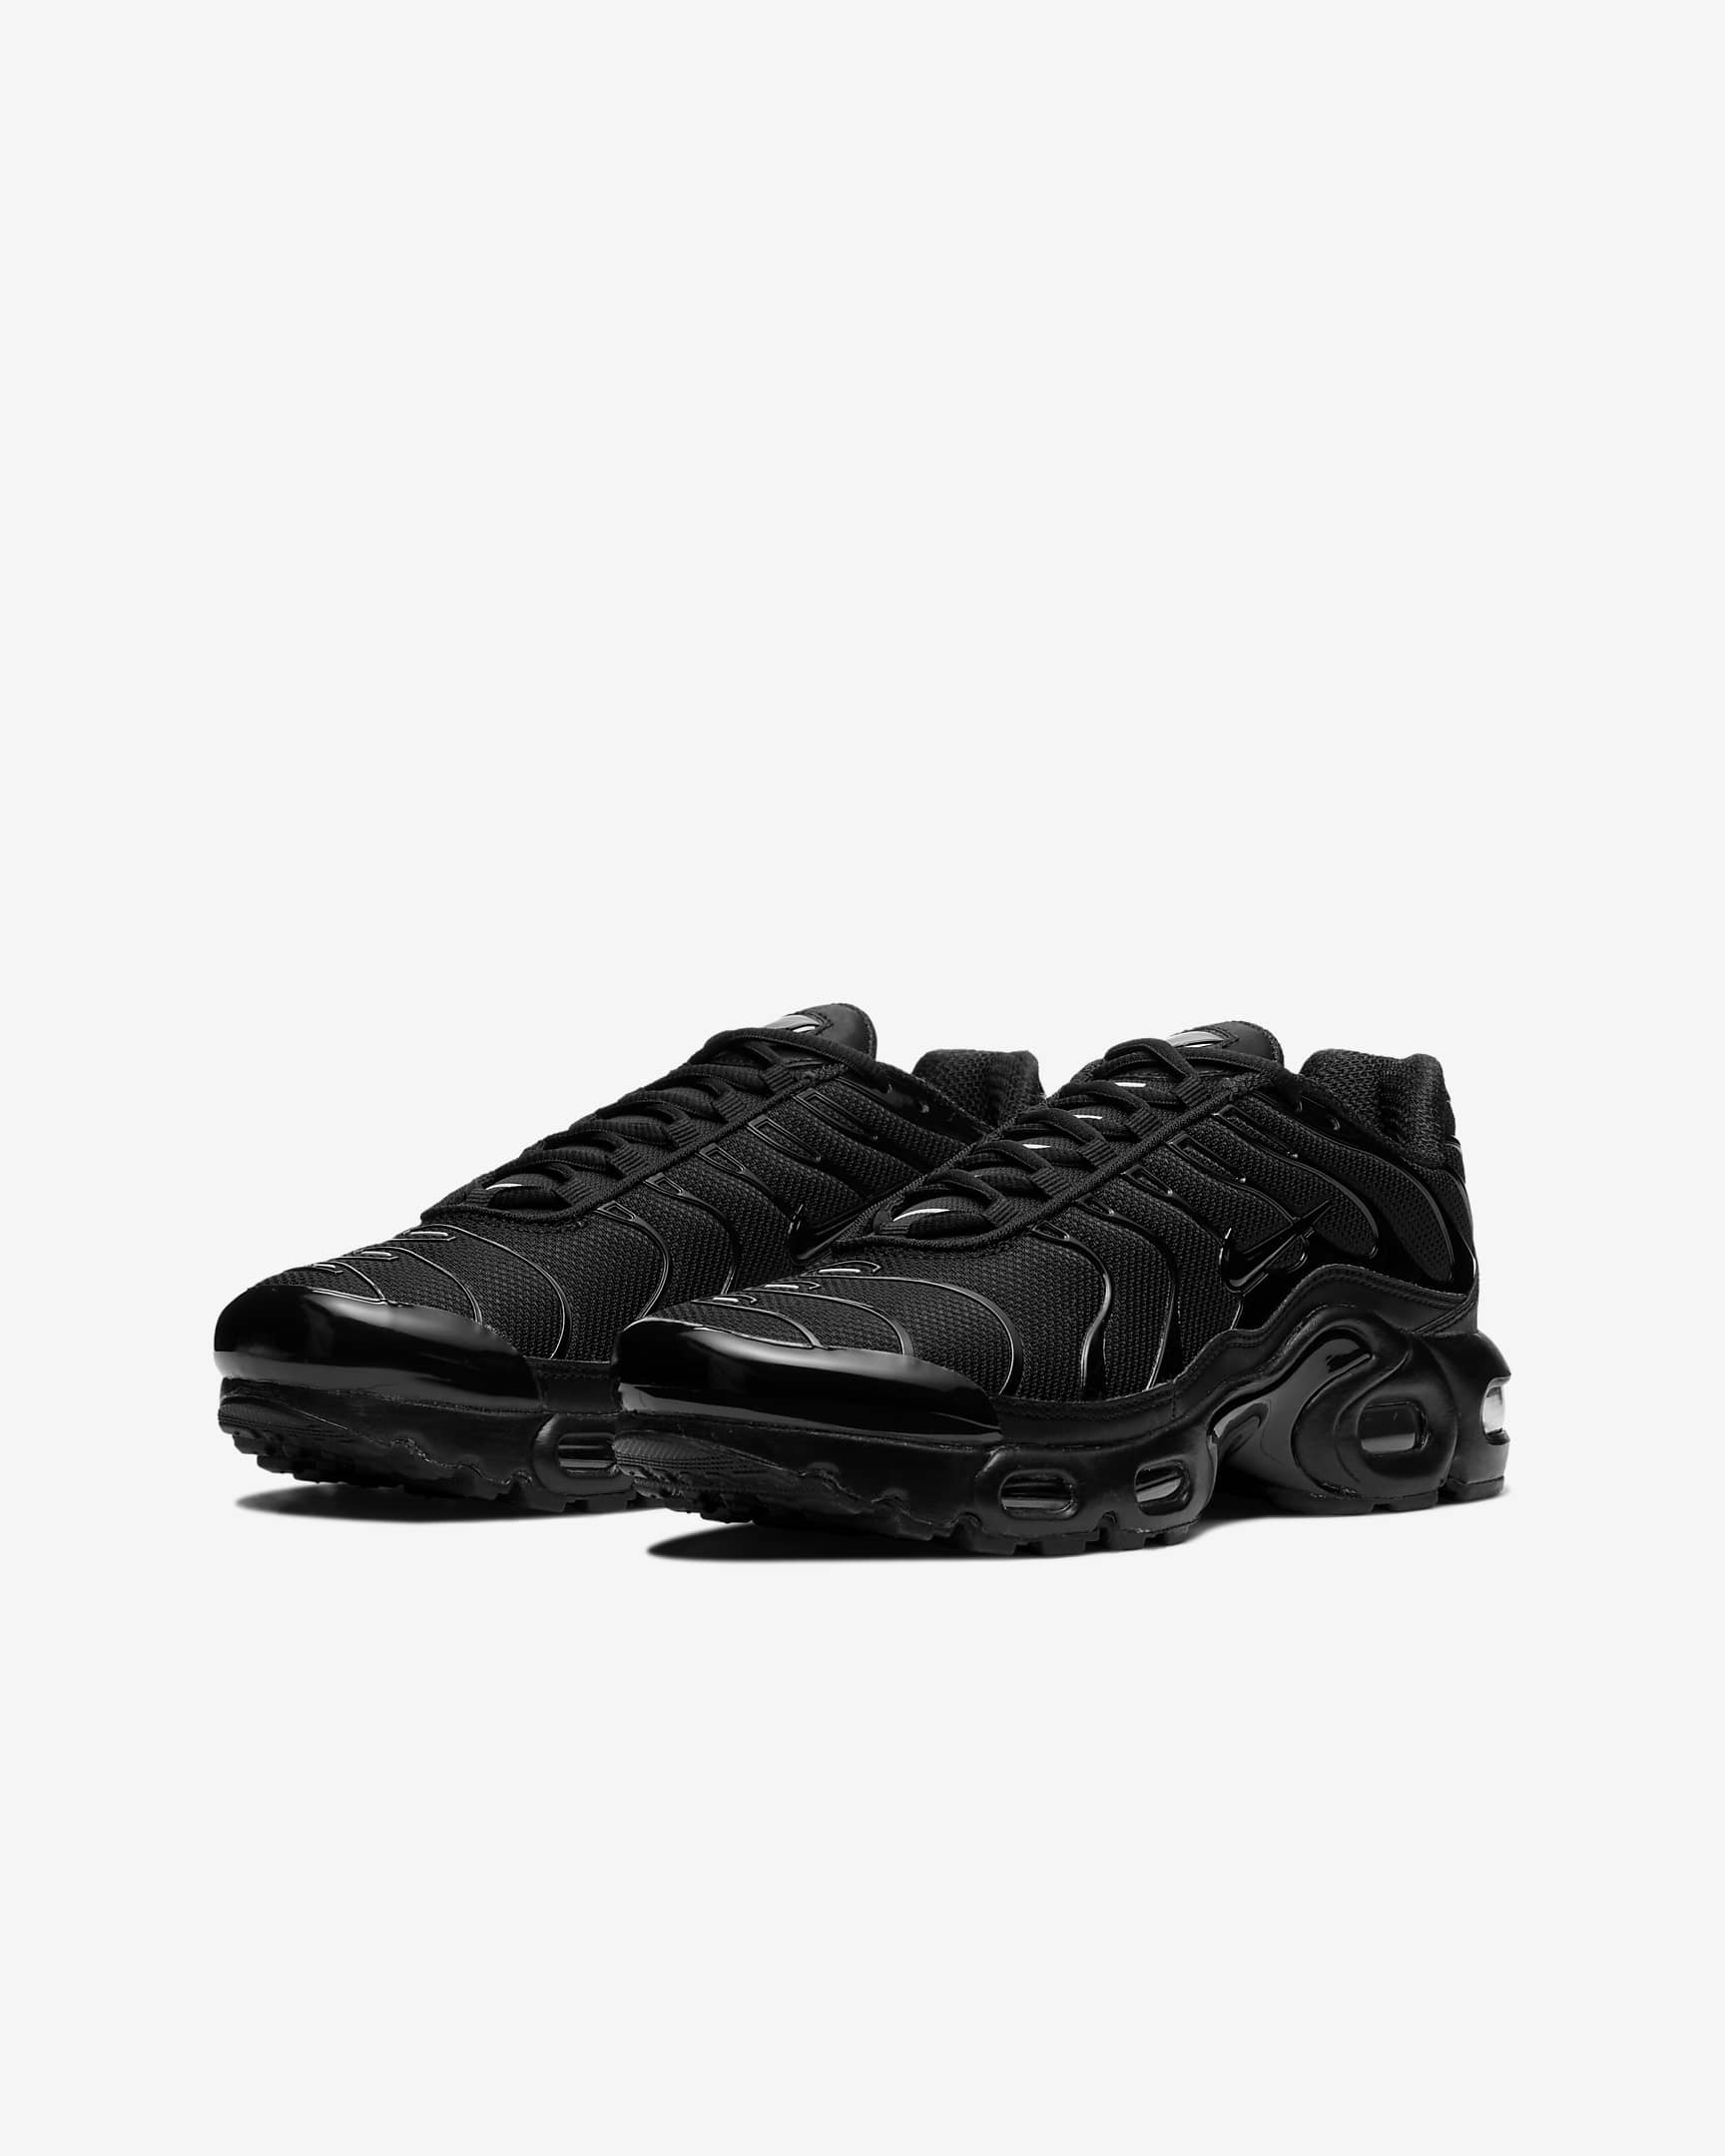 Chaussure Nike Air Max Plus pour ado - Noir/Noir/Noir